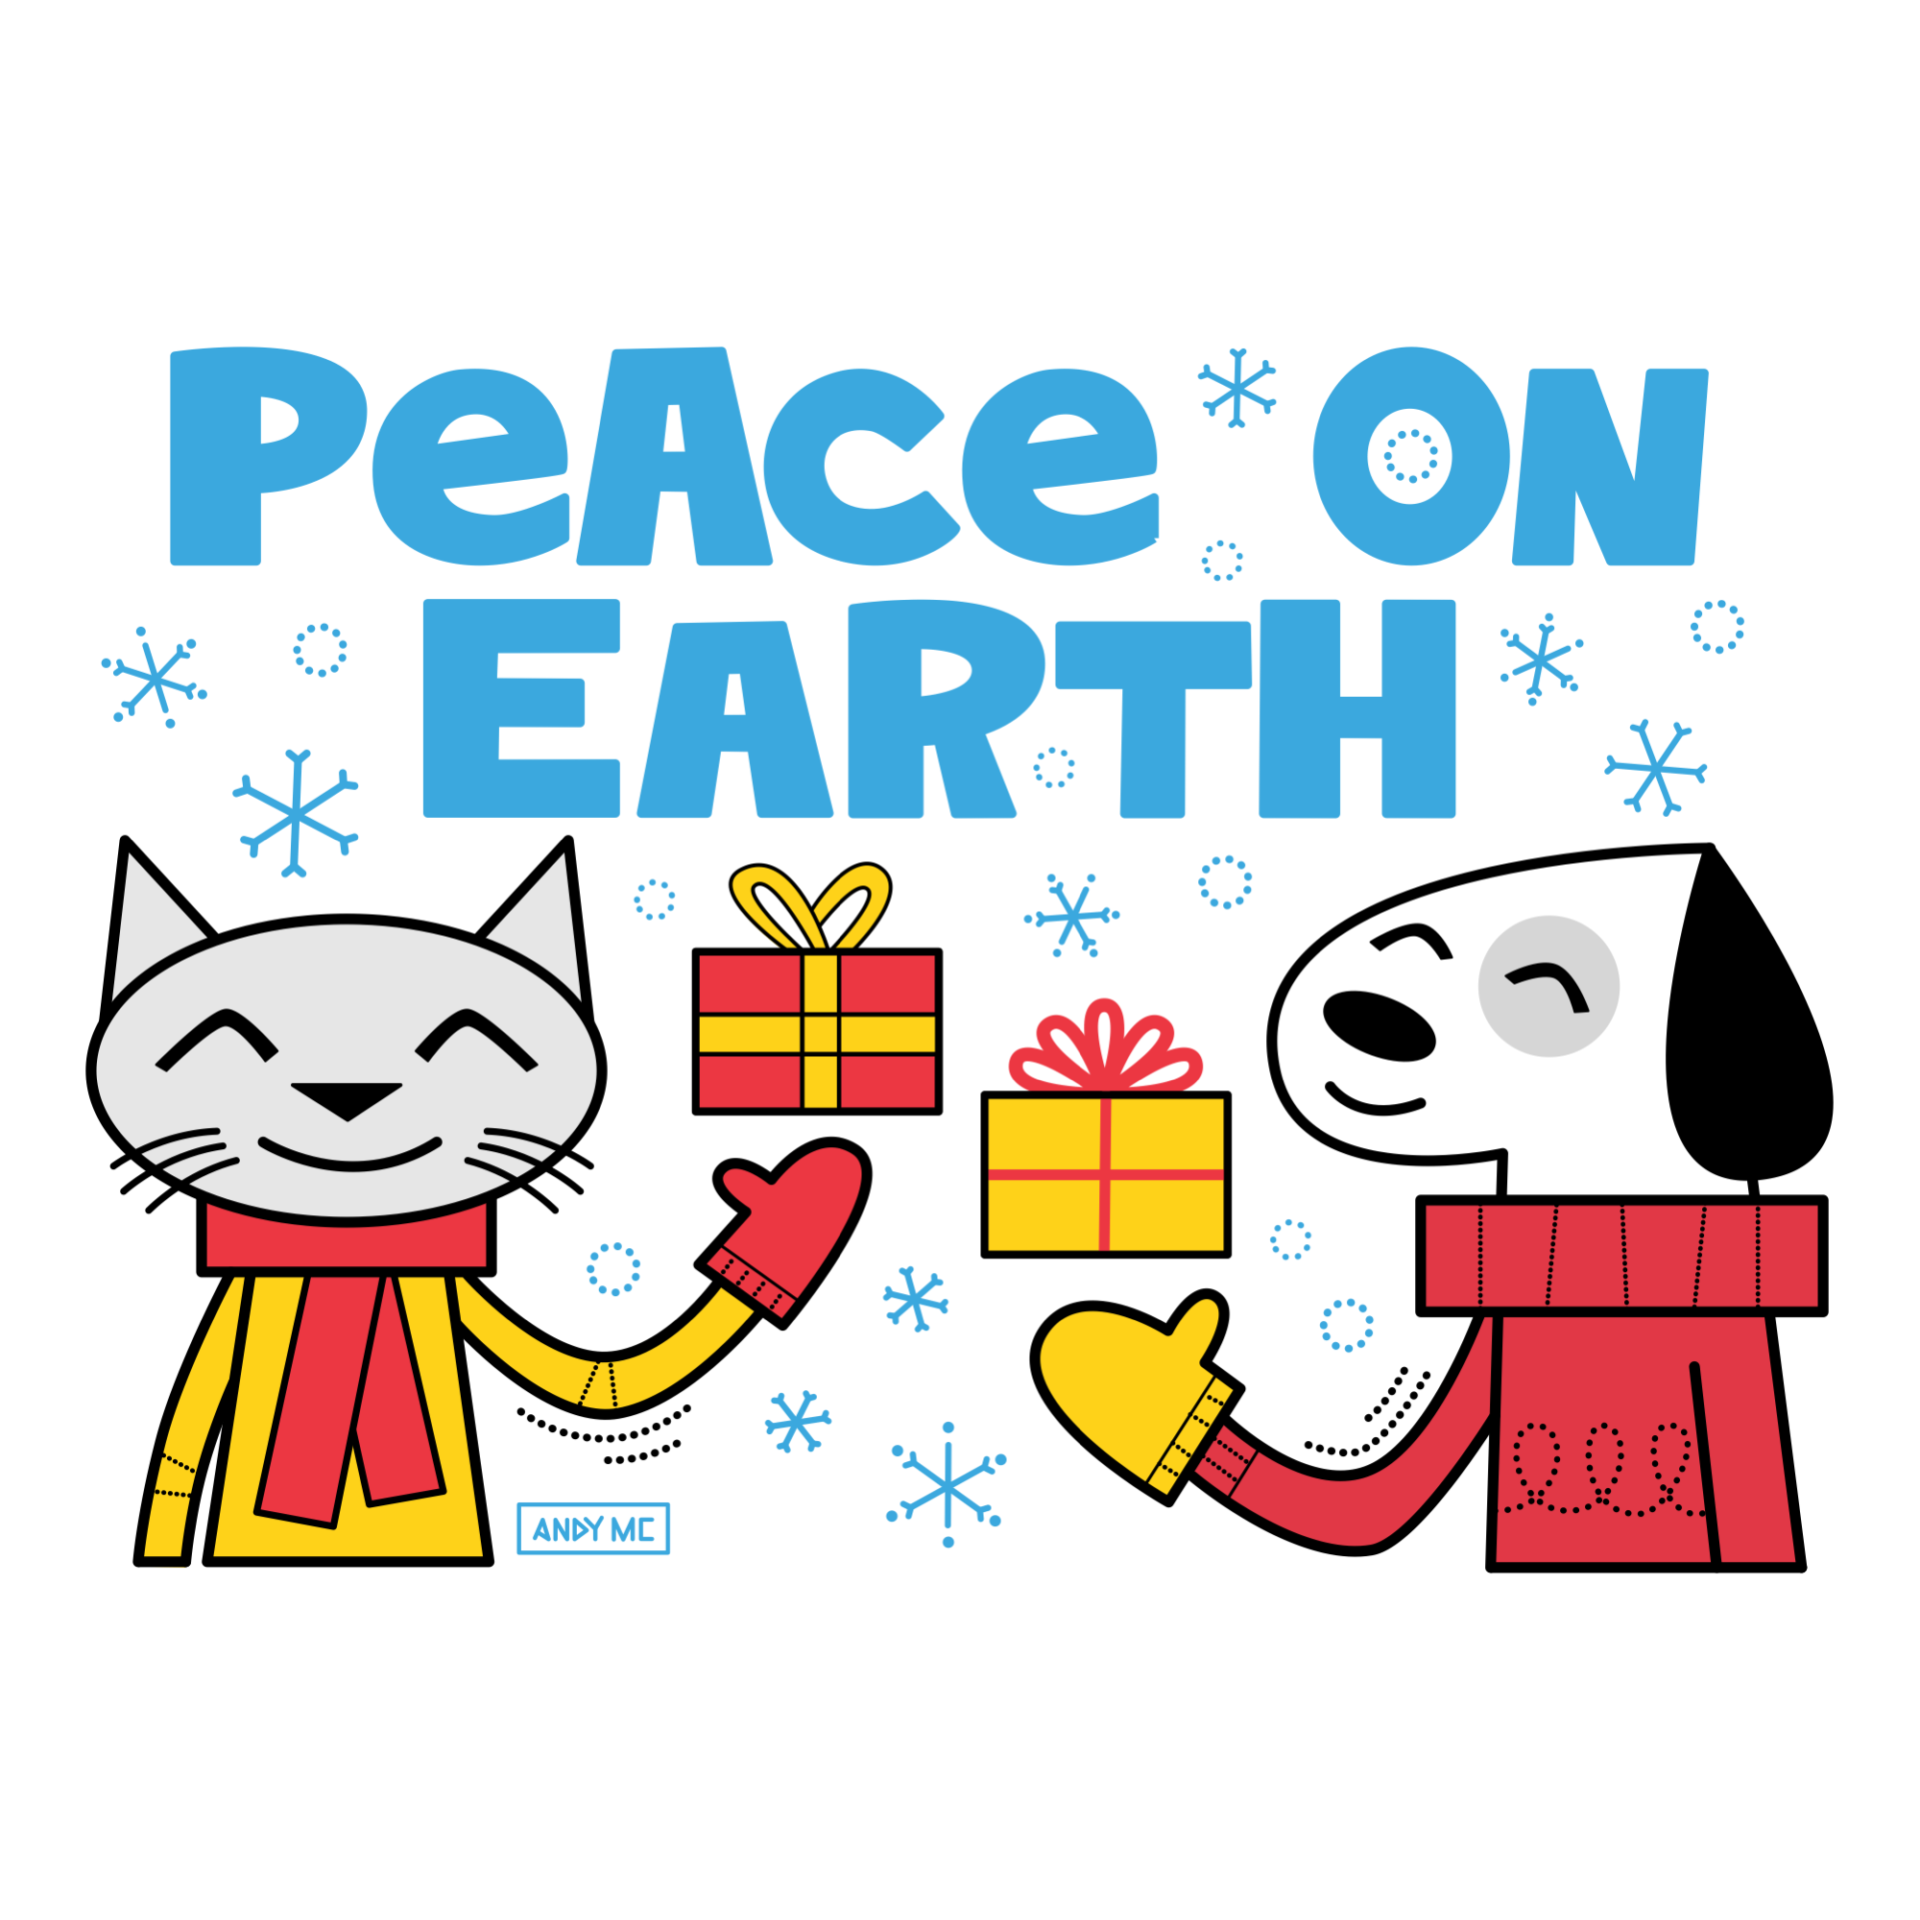 Peace on Earth illustration